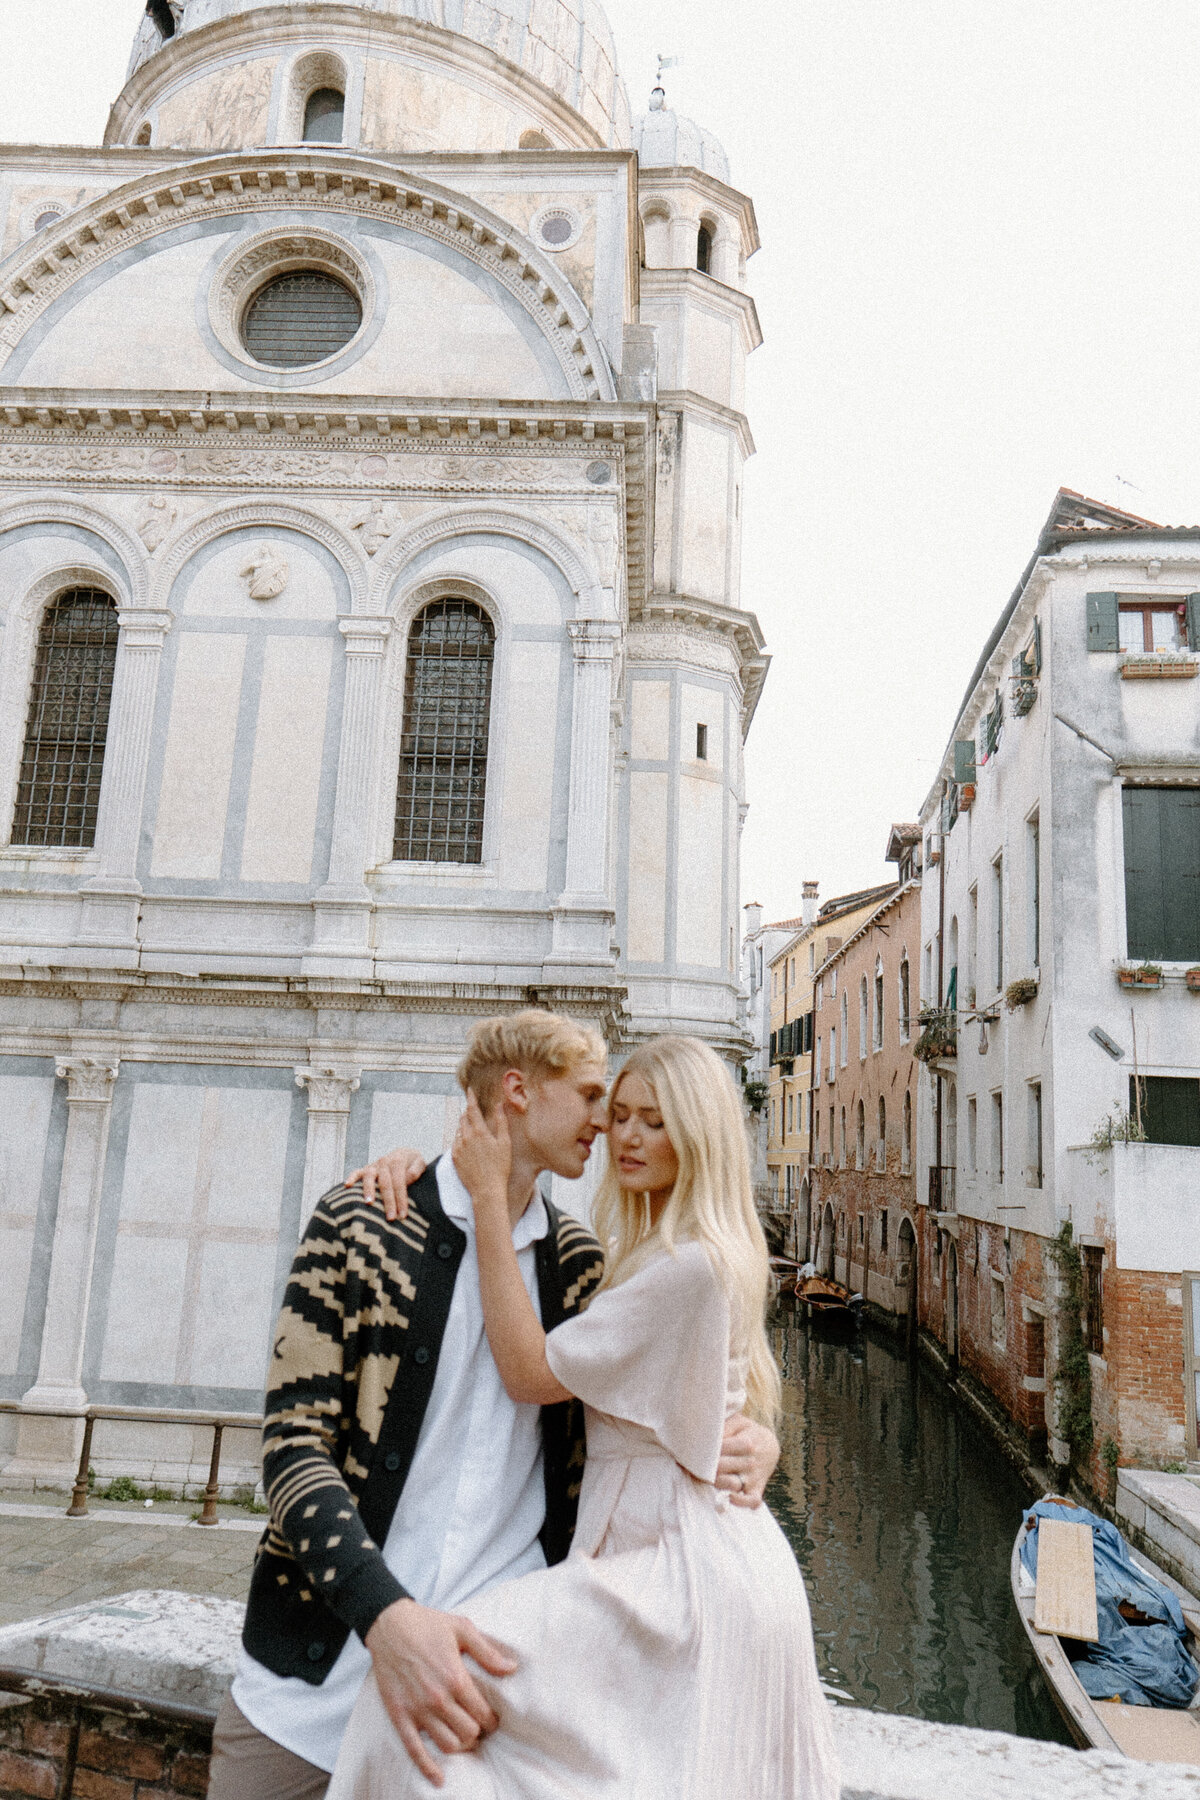 Documentary-Style-Editorial-Vogue-Italy-Destination-Wedding-Leah-Gunn-Photography-52